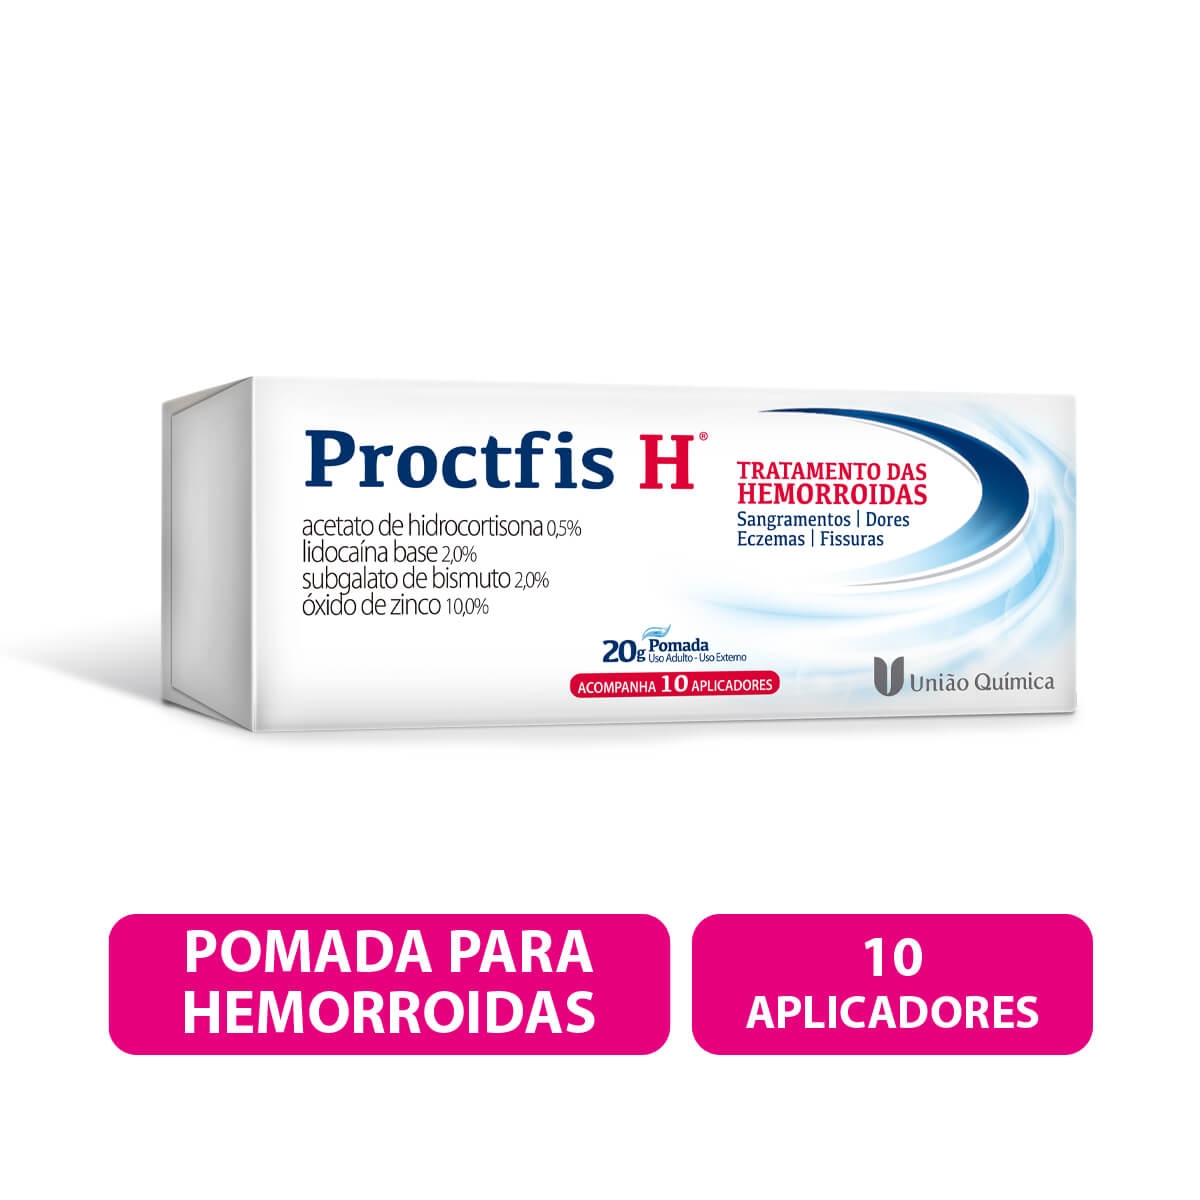 Proctfis H 0,5% + 2,0% + 2,0% + 10,0% Pomada 20g e 10 aplicadores